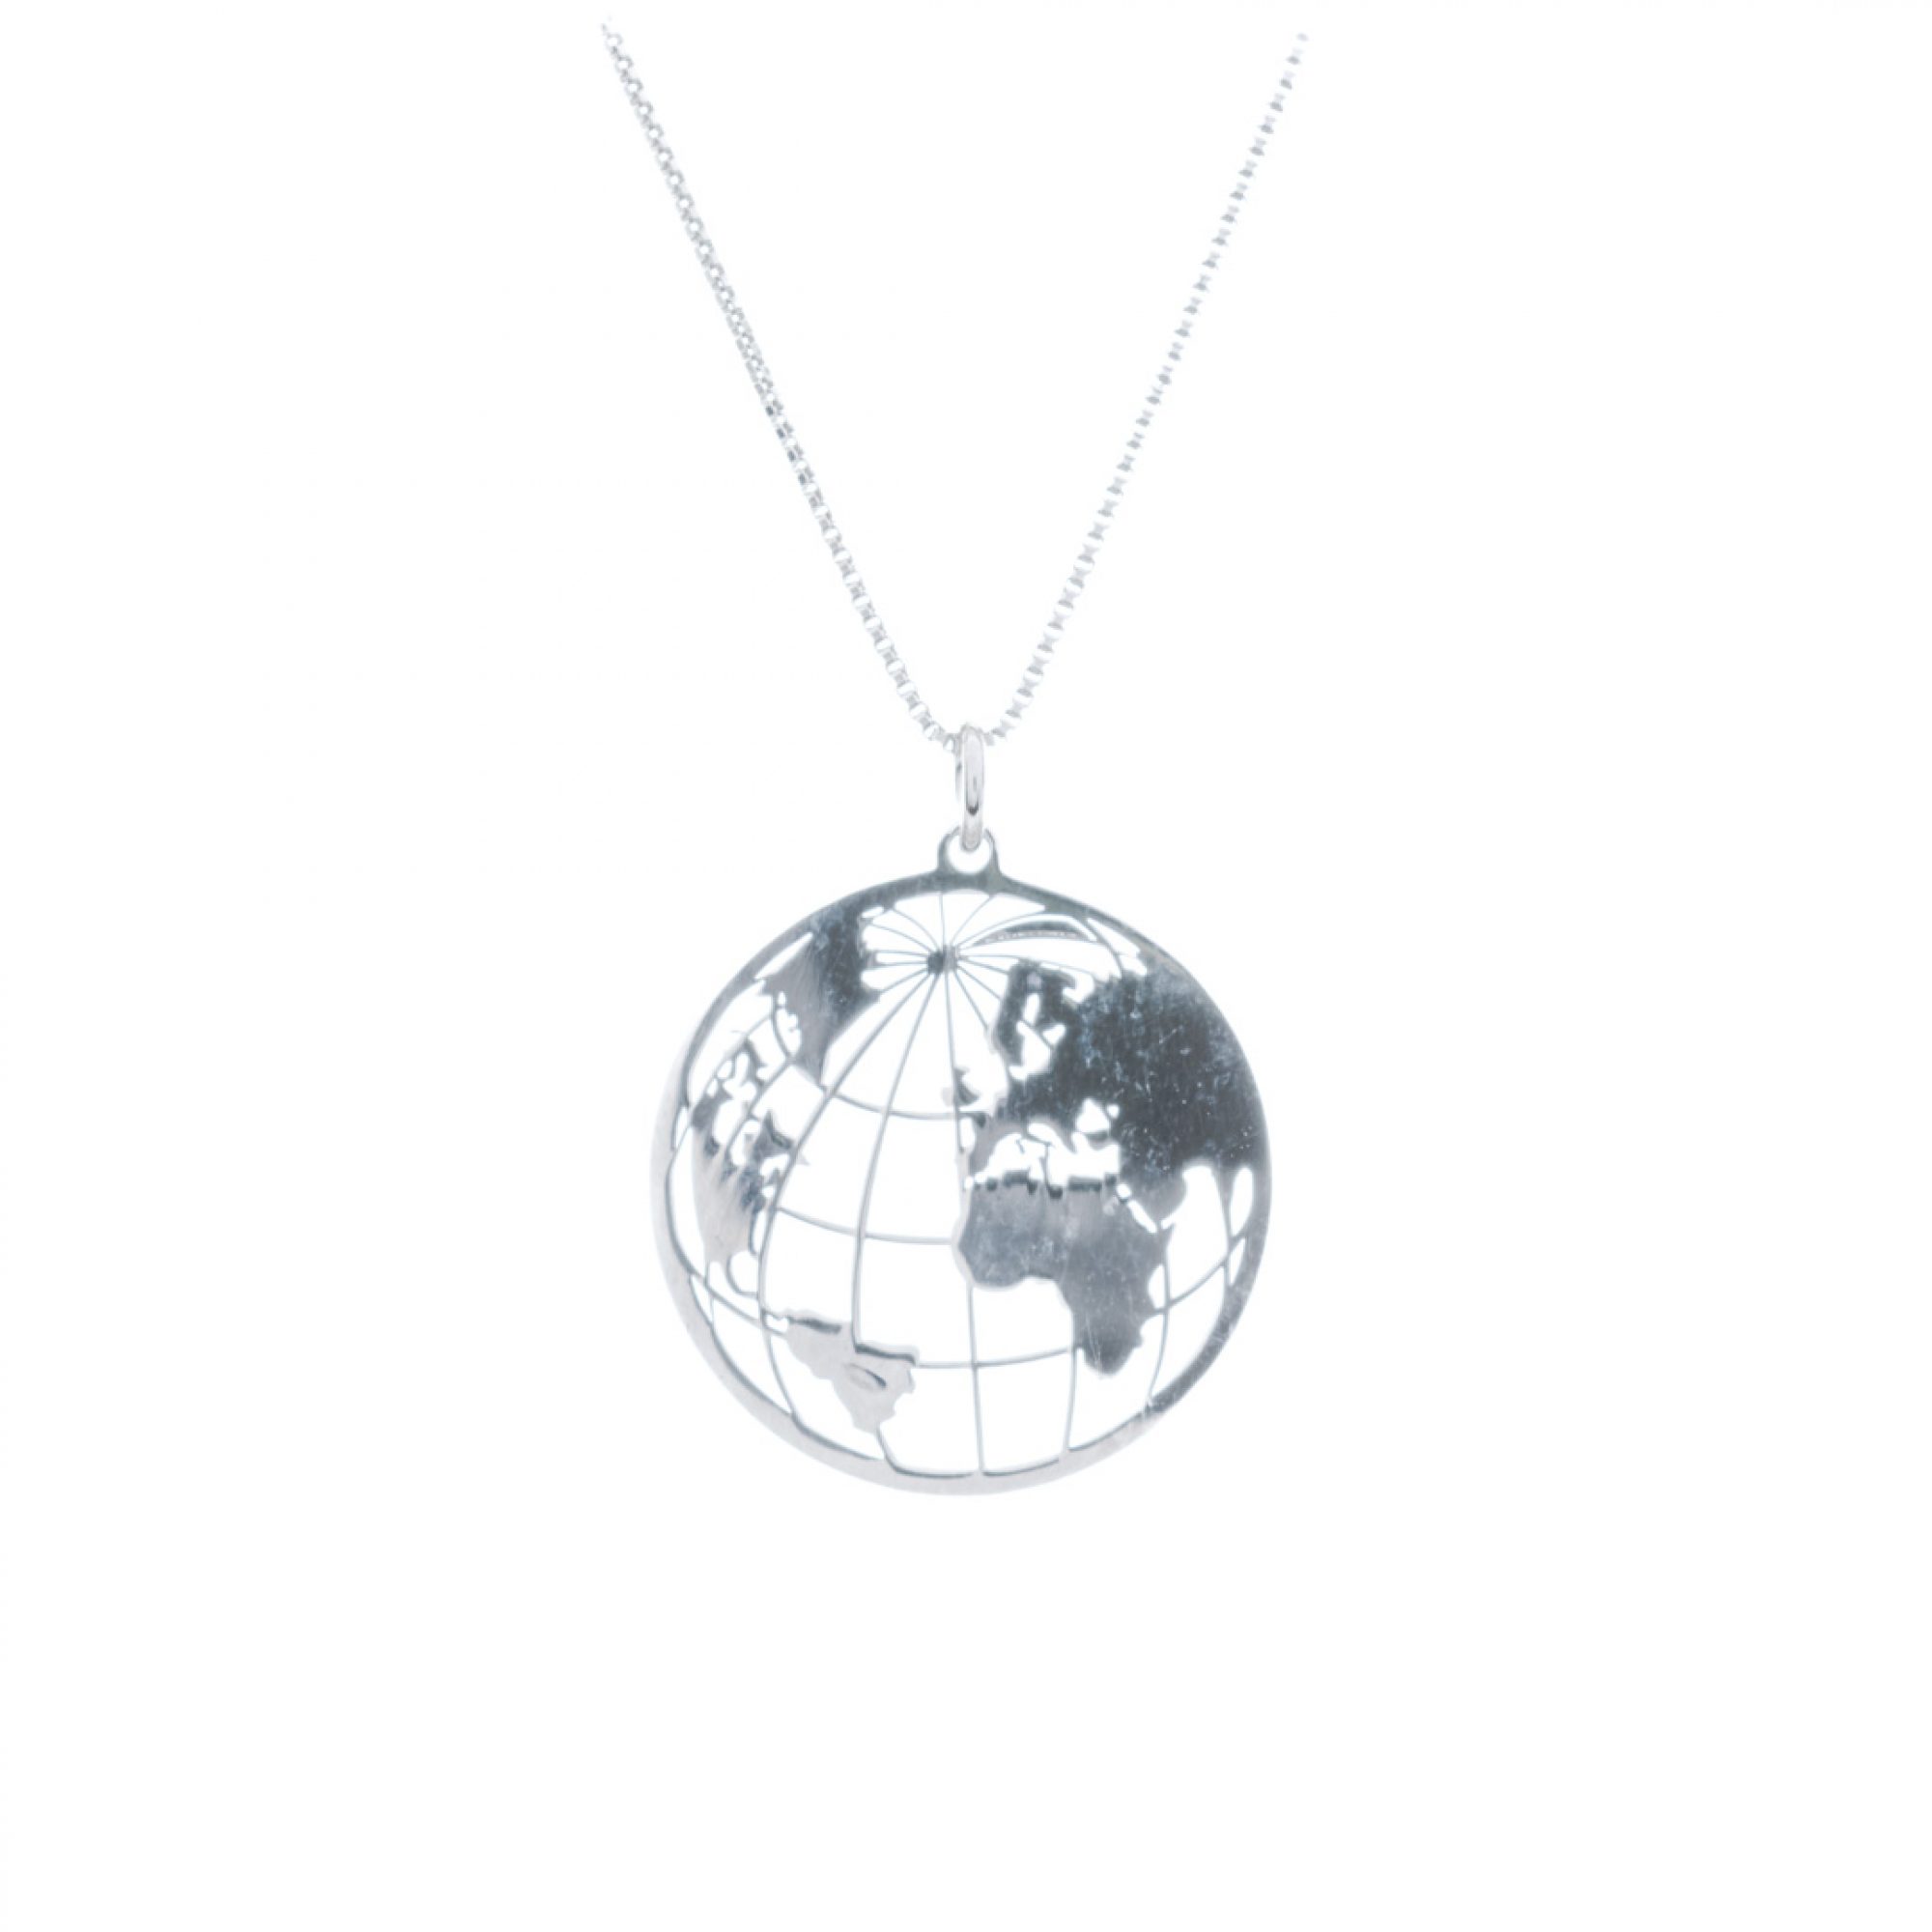 Silver globe necklace